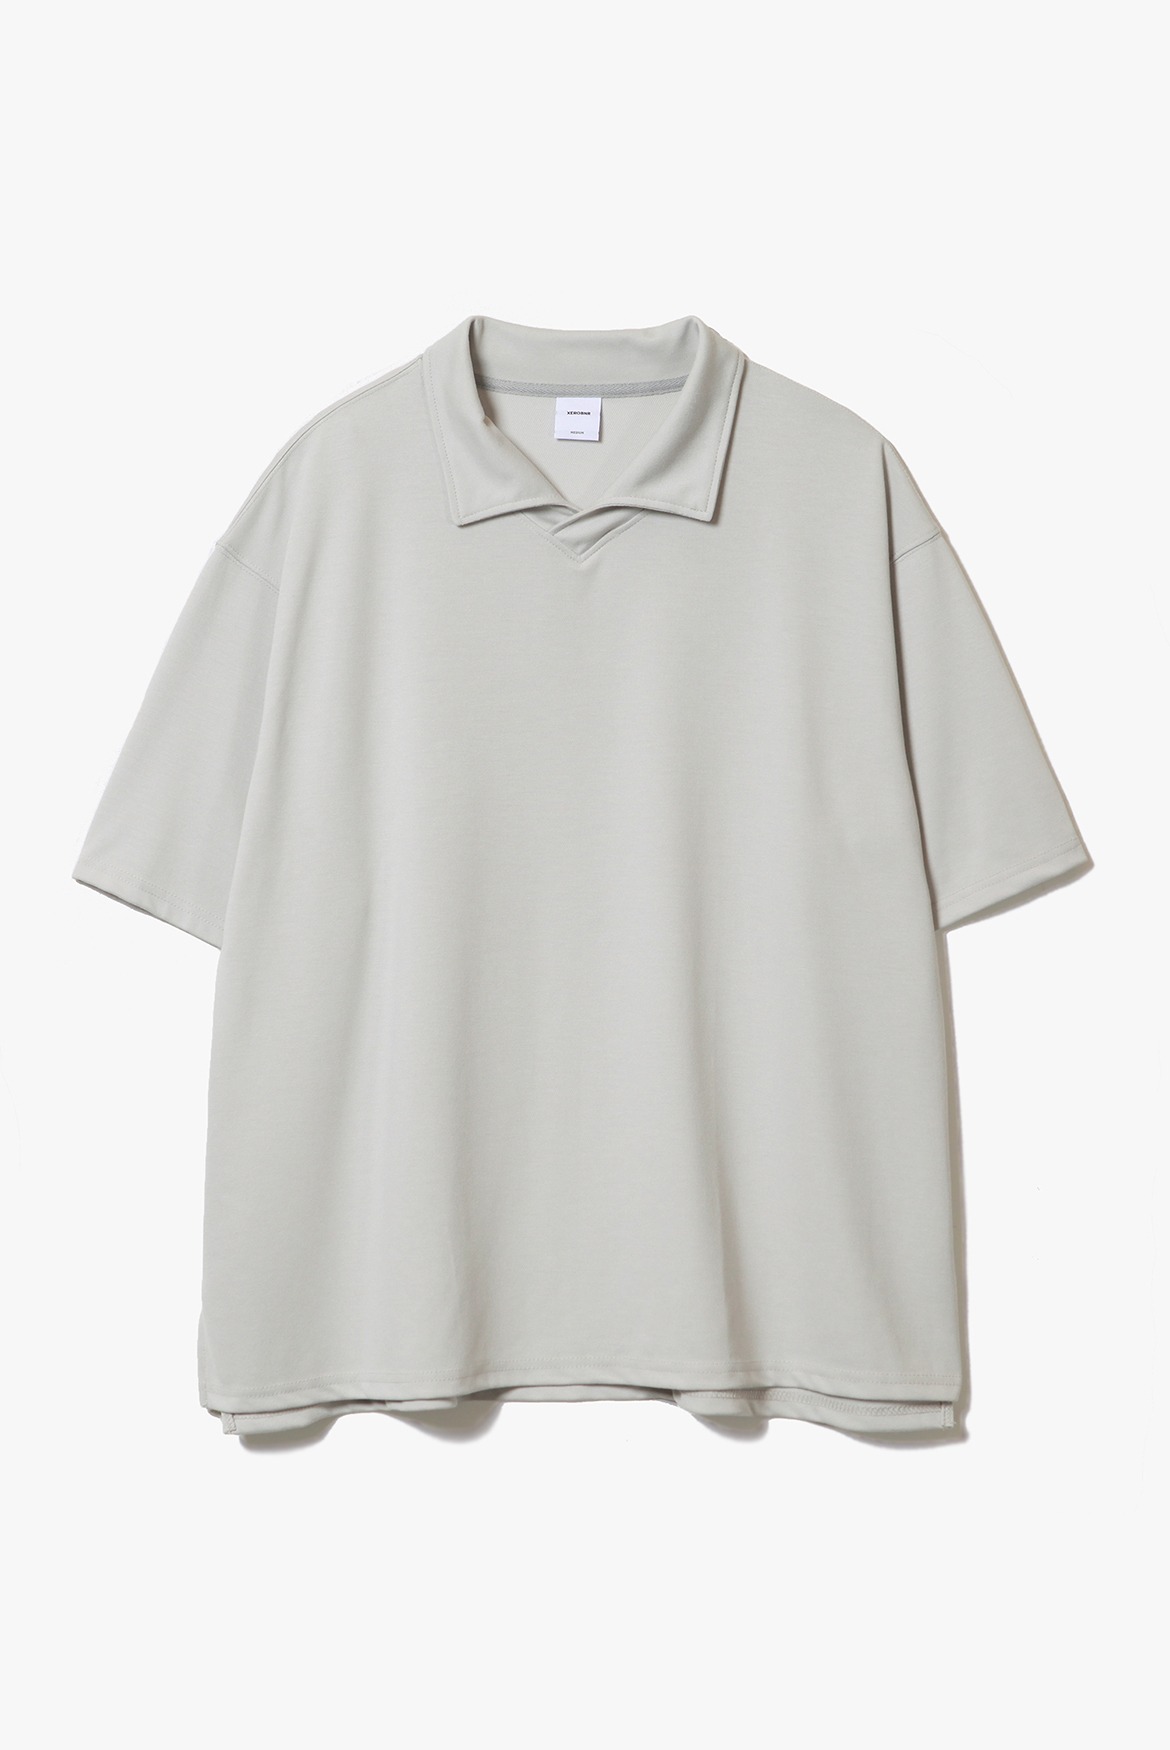 V-Neck Stand Collar T-Shirts [Grey]